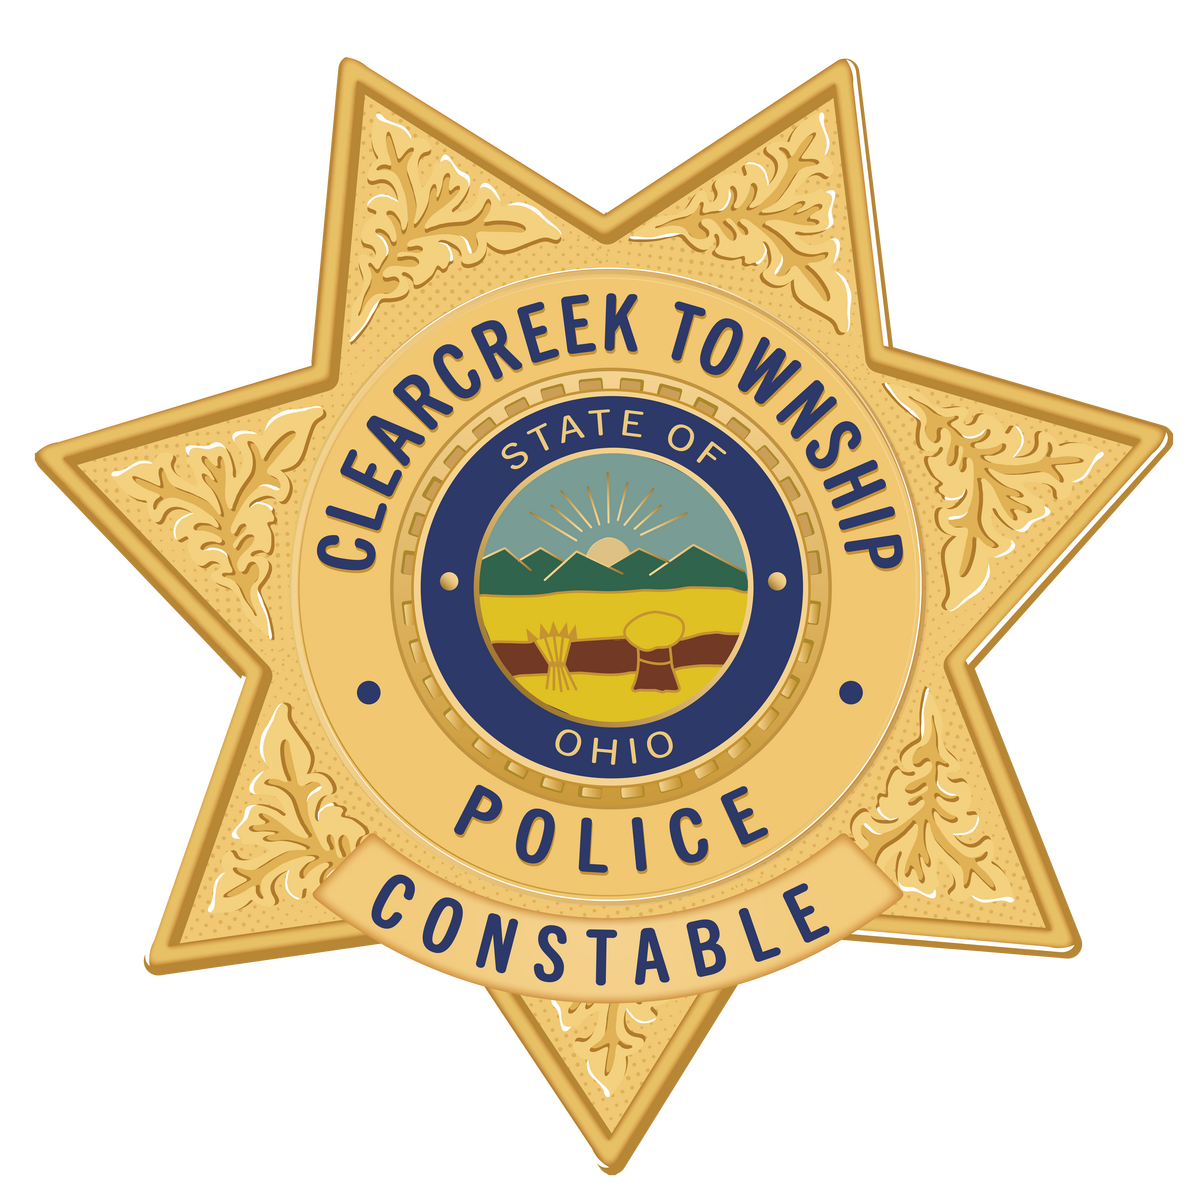 Police Constable badge